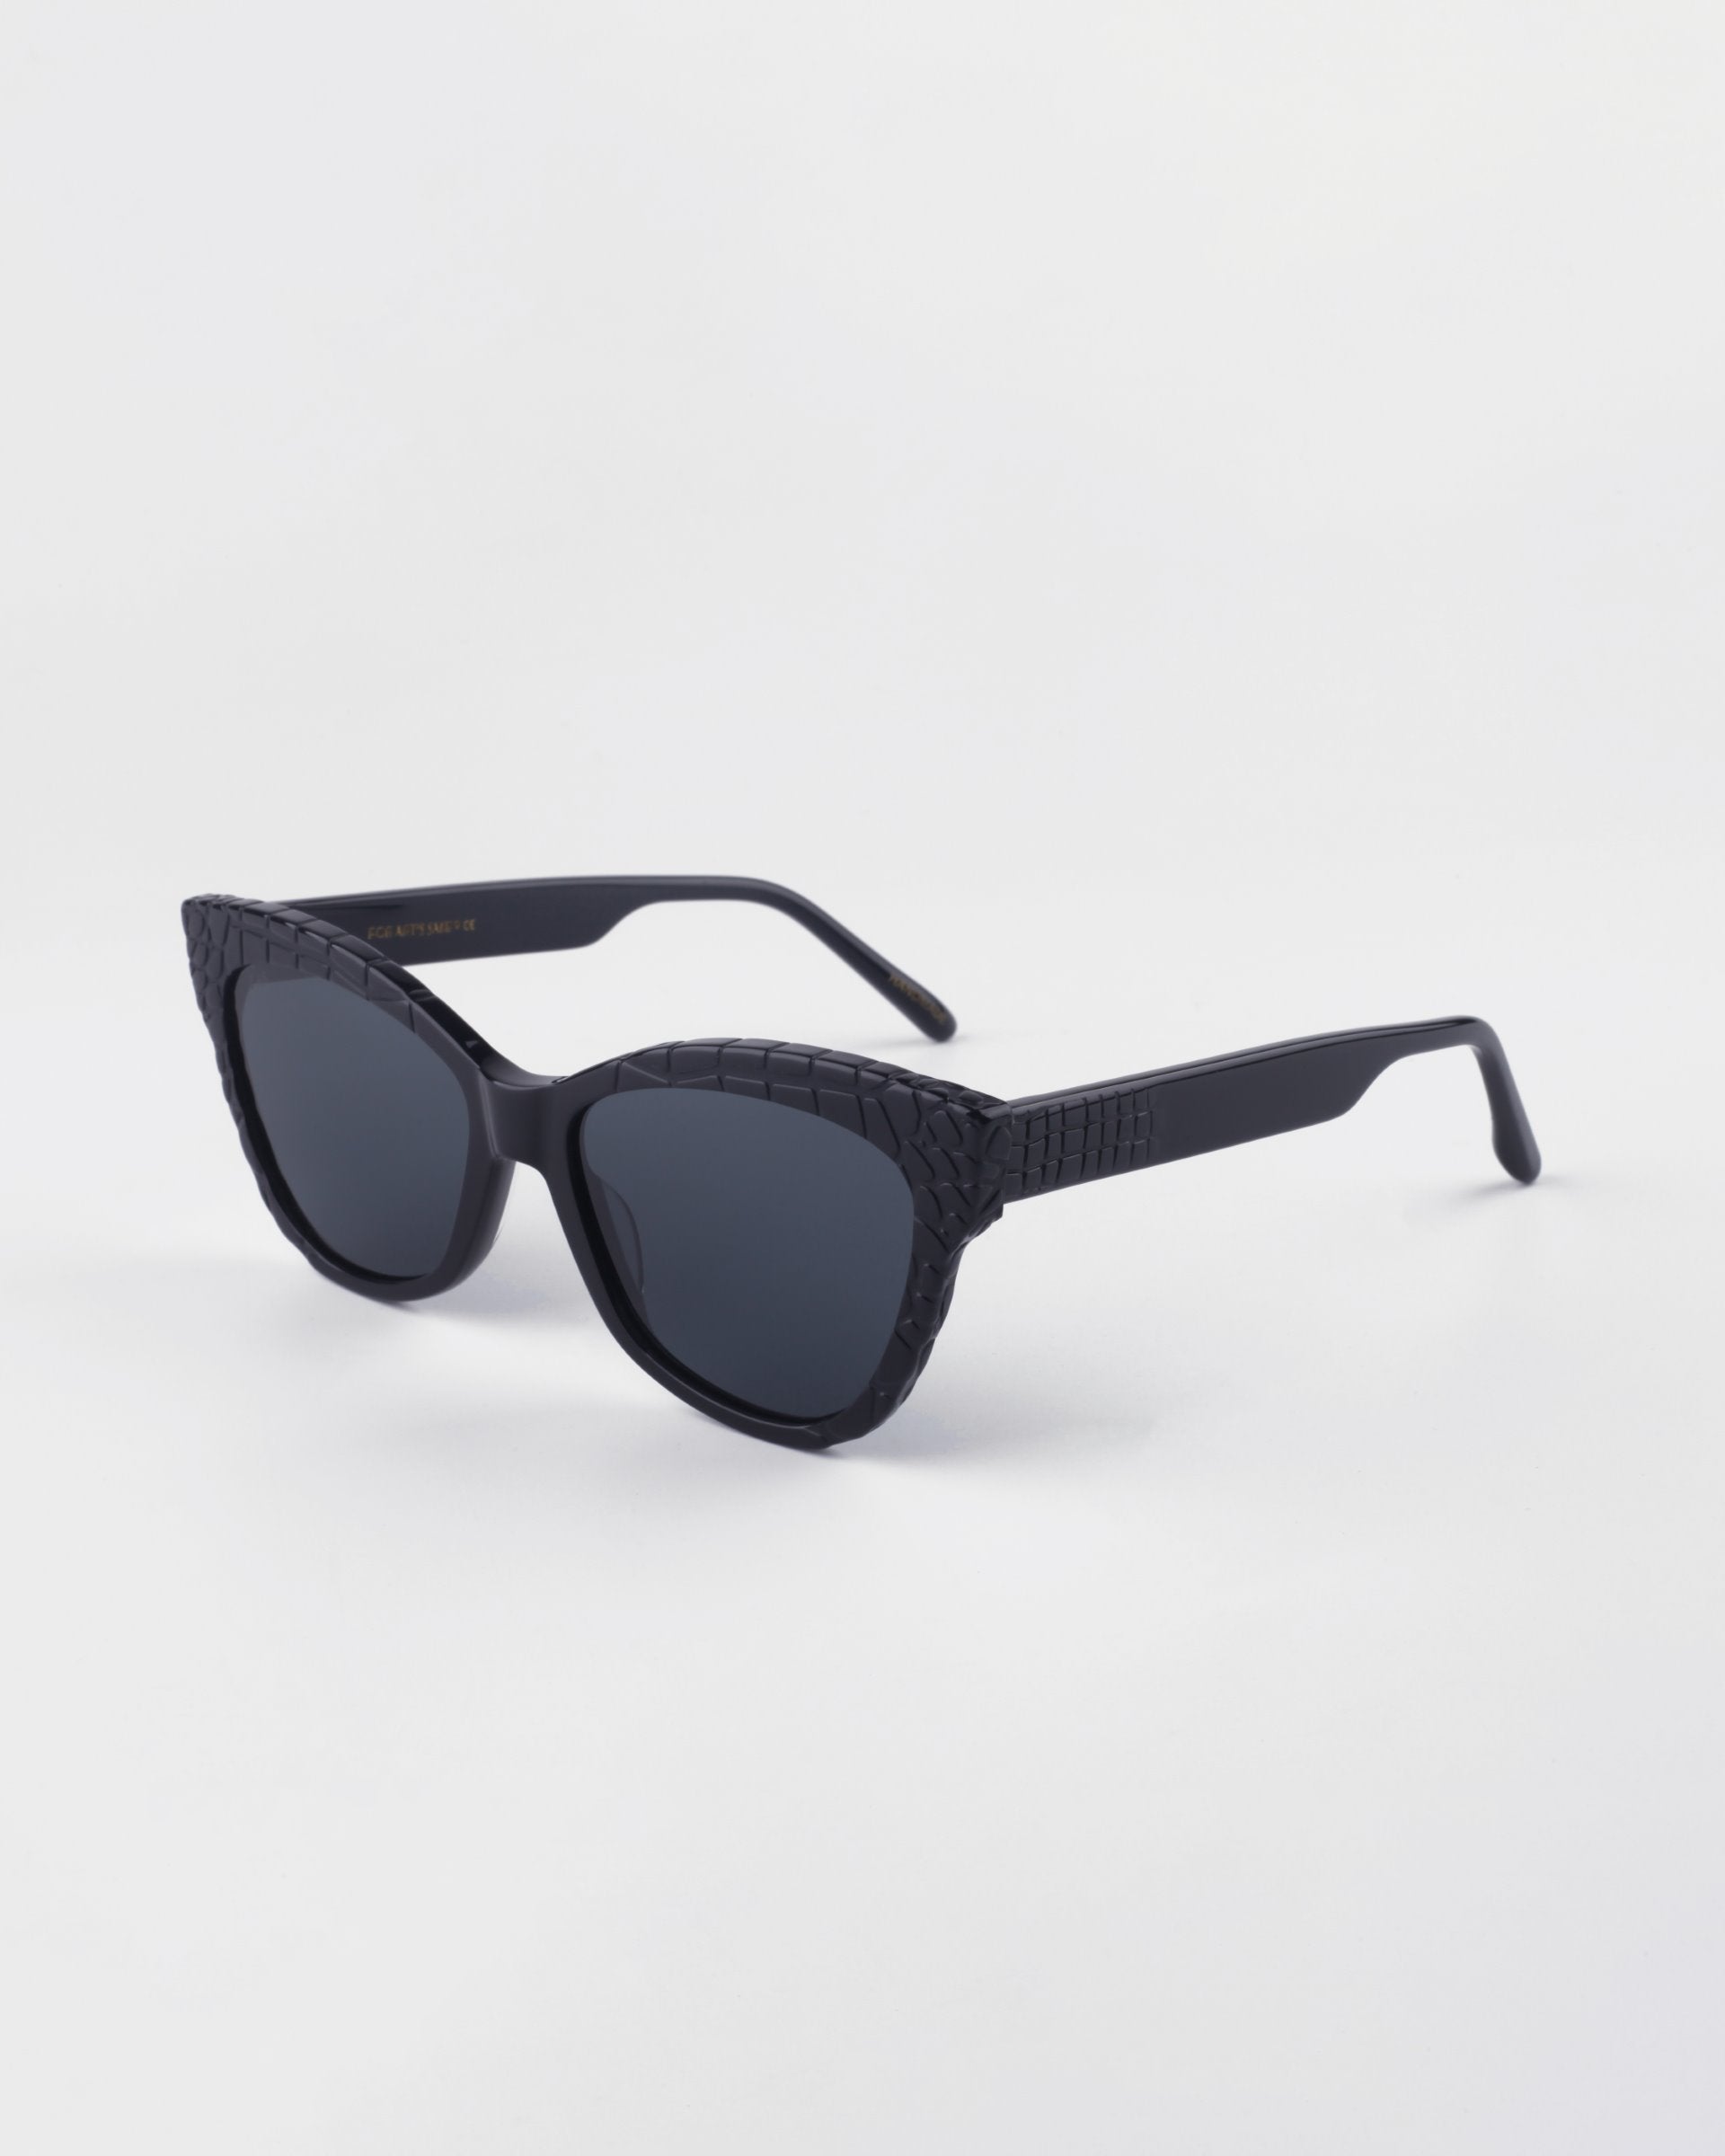 Crocodile Sunglasses, Black. Side Image.